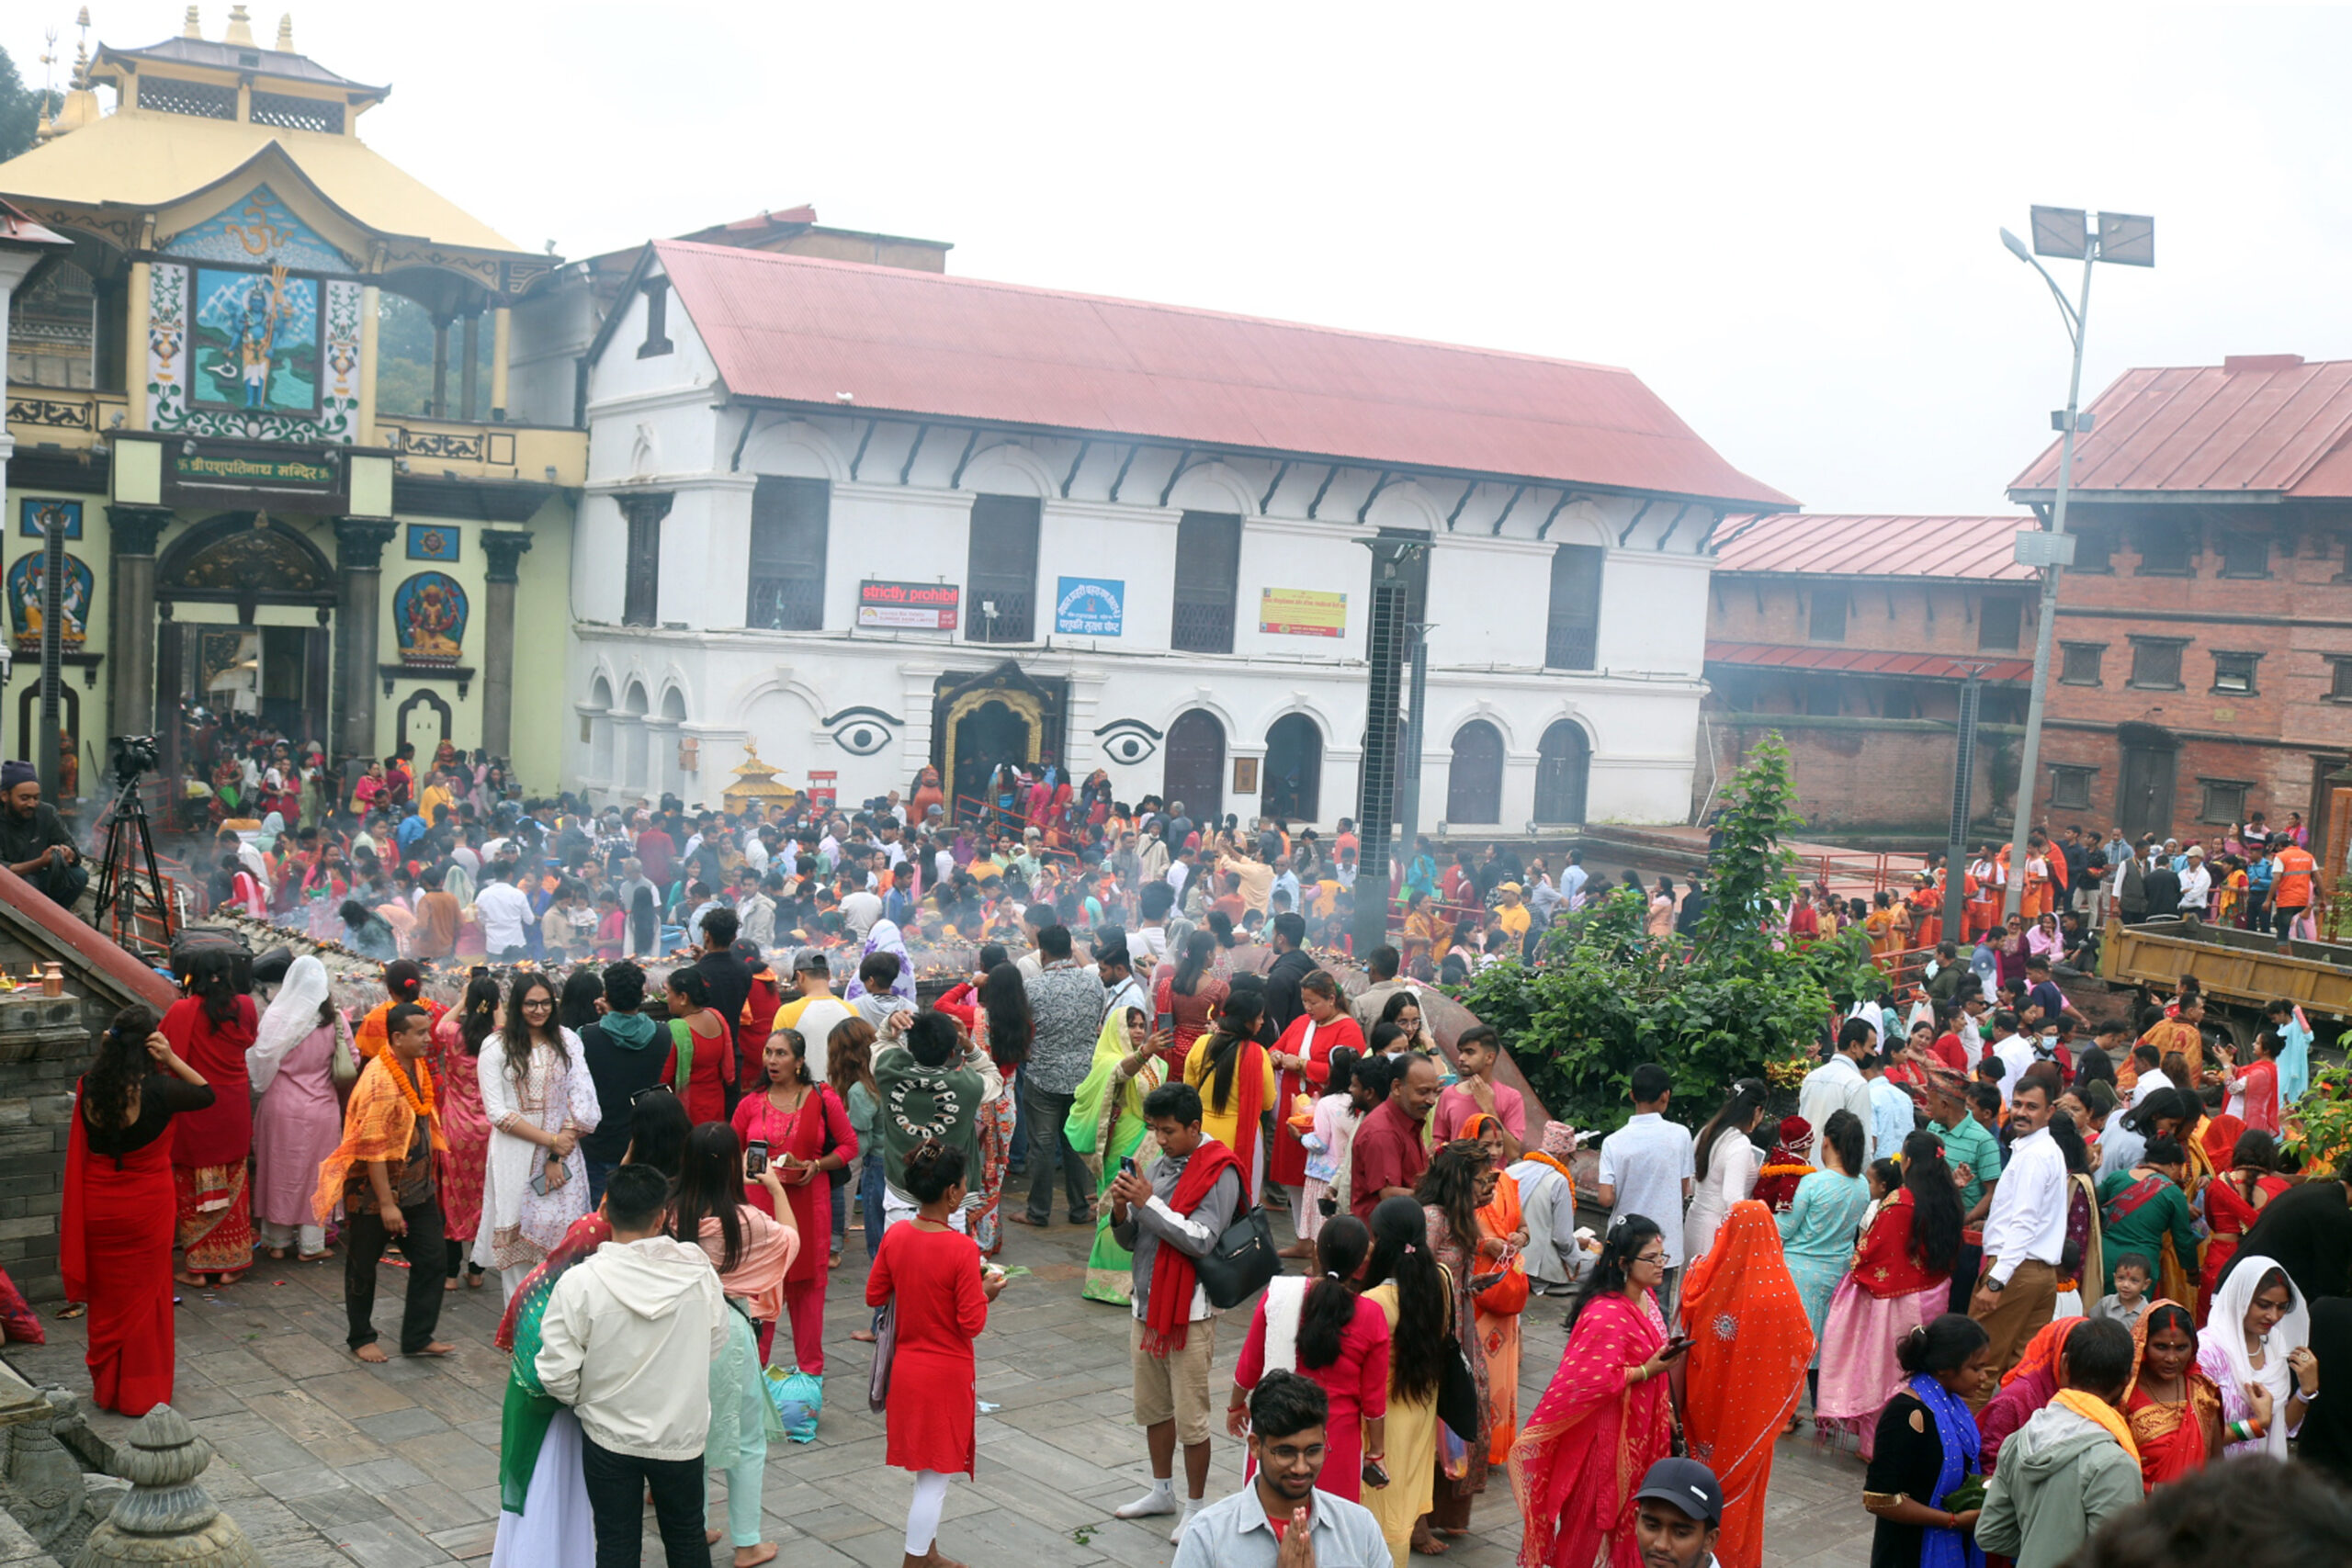 Devotees flock to Pashupatinath temple to mark last Shrawan Monday (photos)